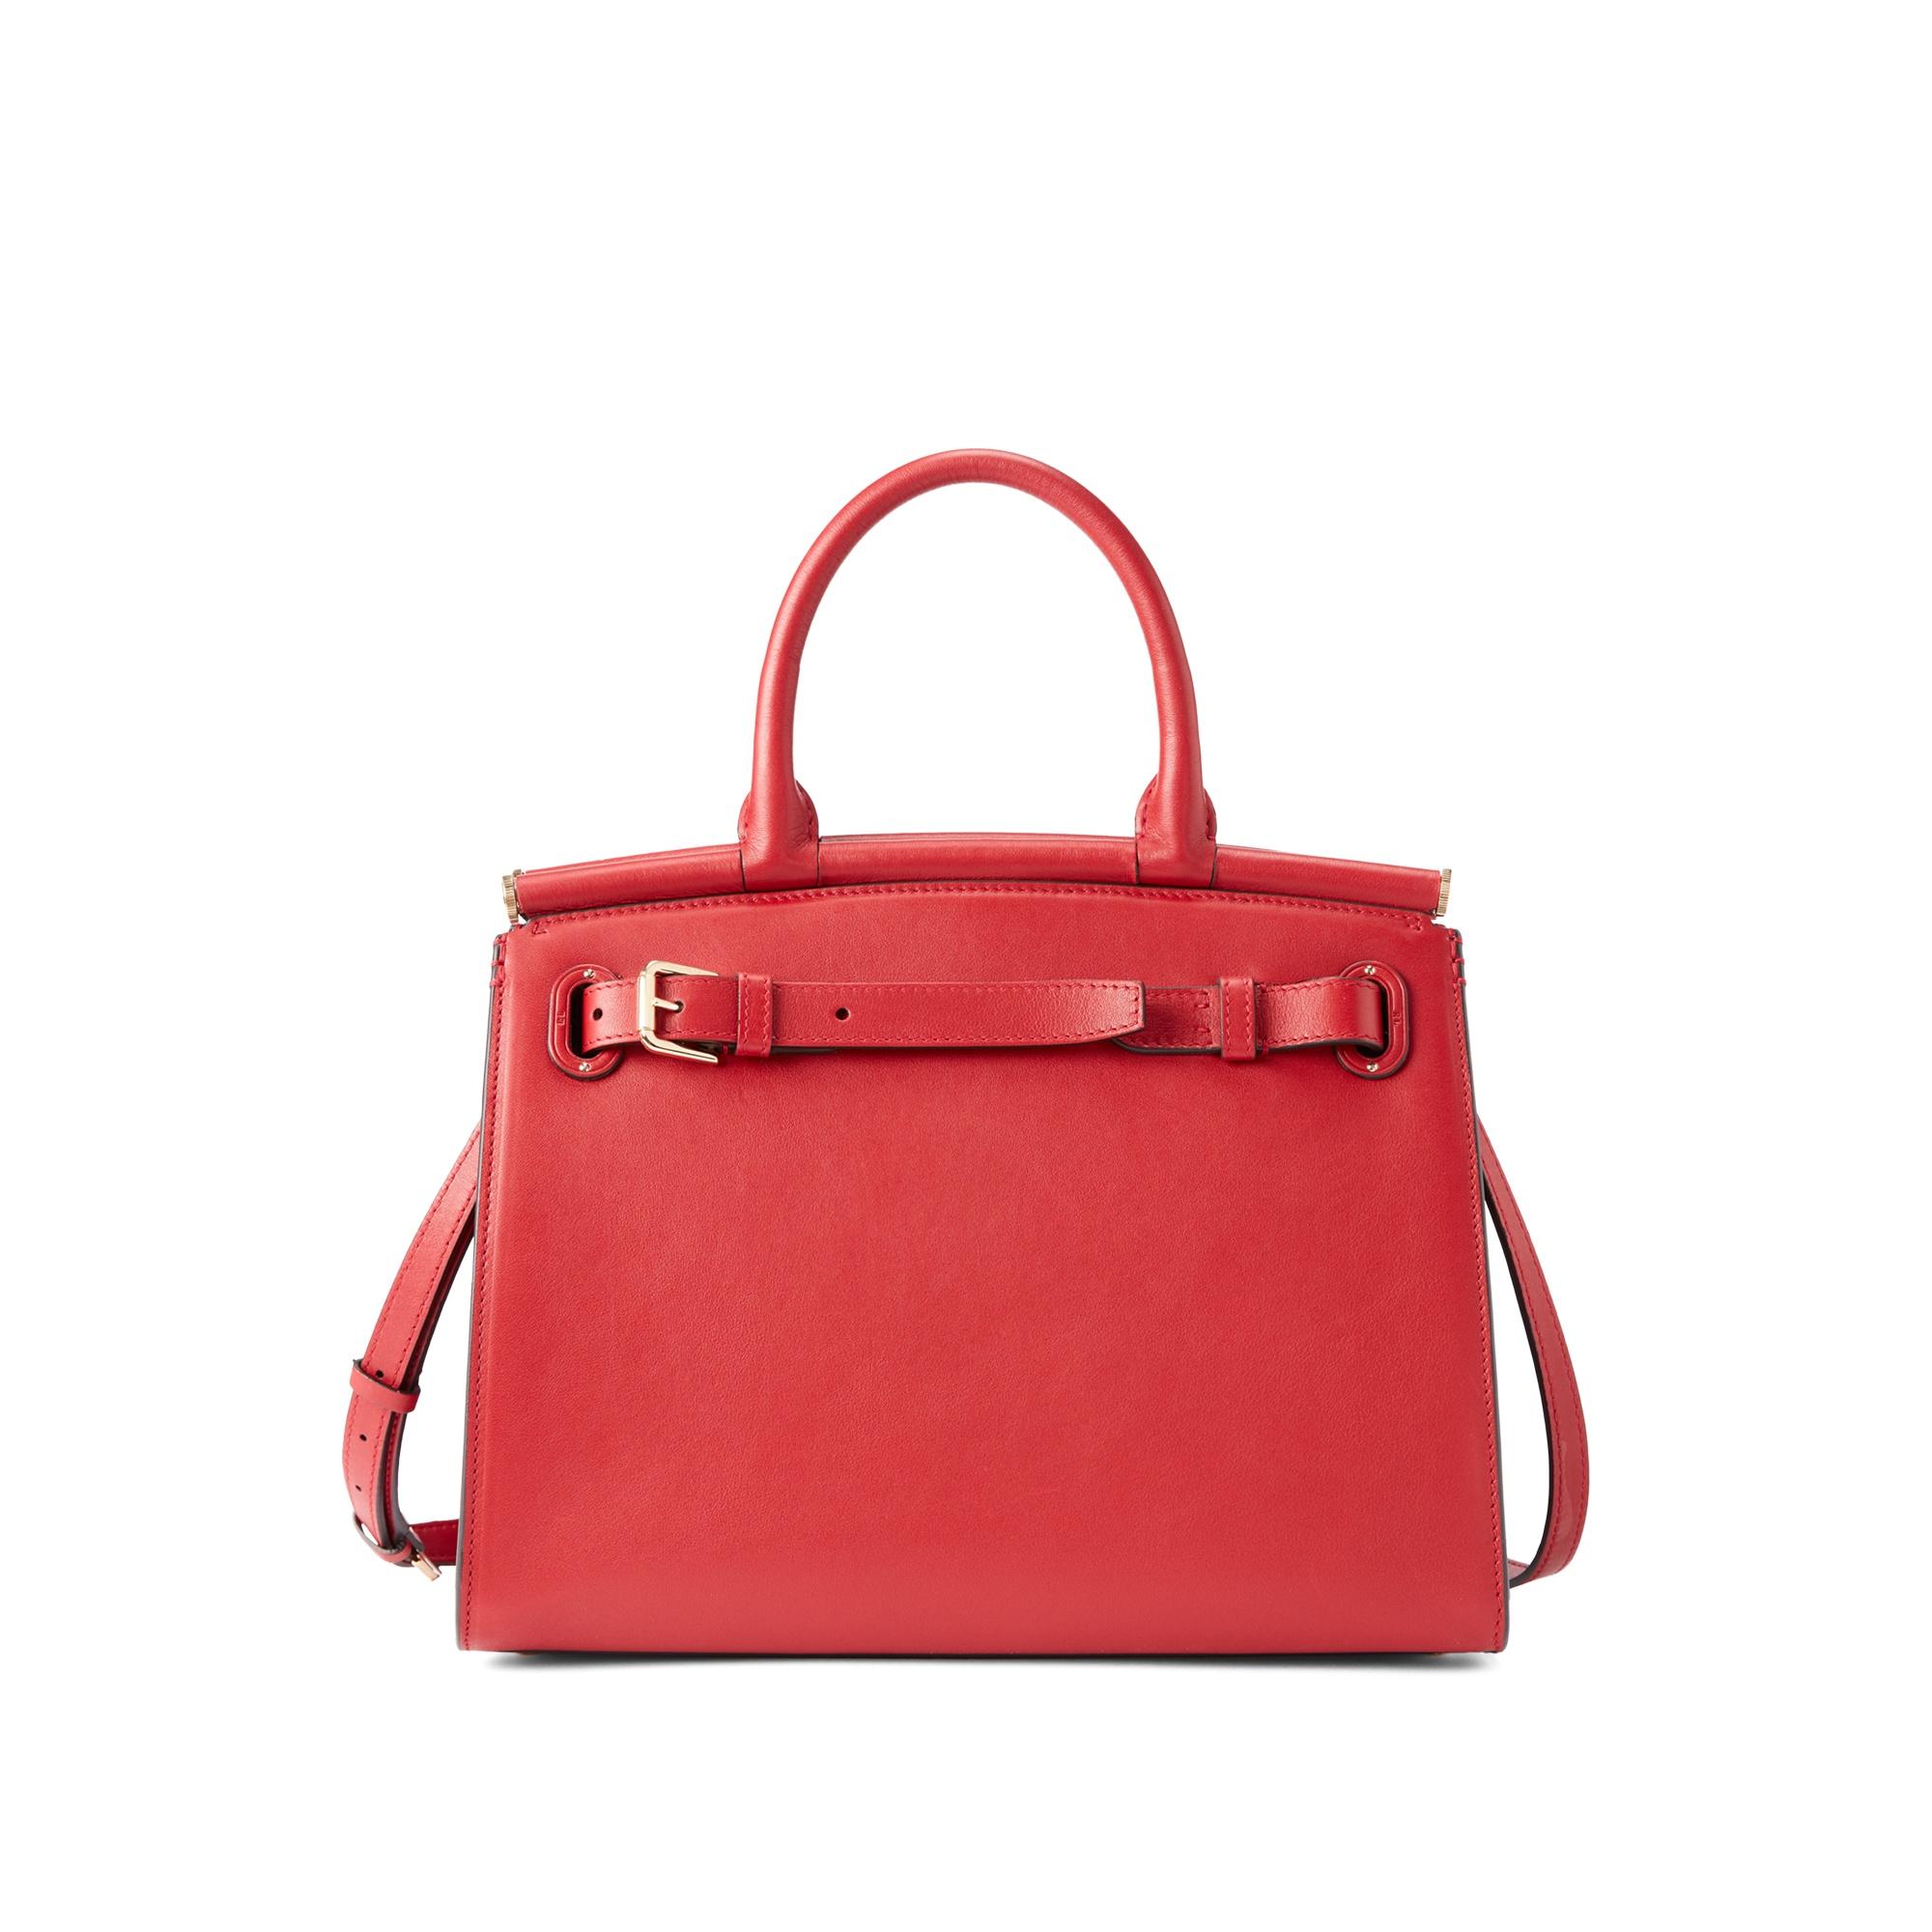 Ralph Lauren Leather Calfskin Medium Rl50 Handbag in Deep Red (Red ...